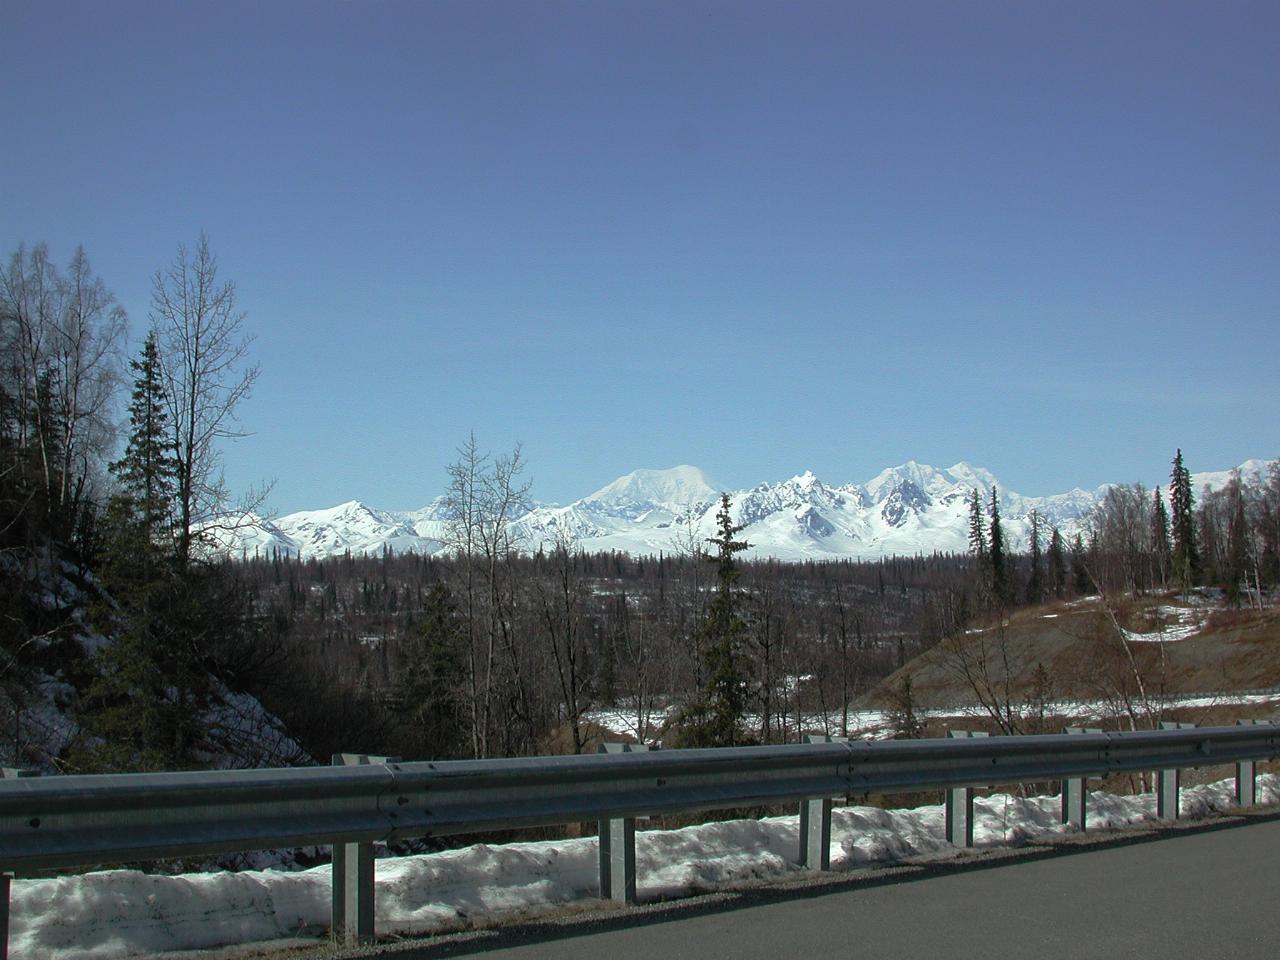 Alaska Range, as seen from Princess Resort road in Denali State Park